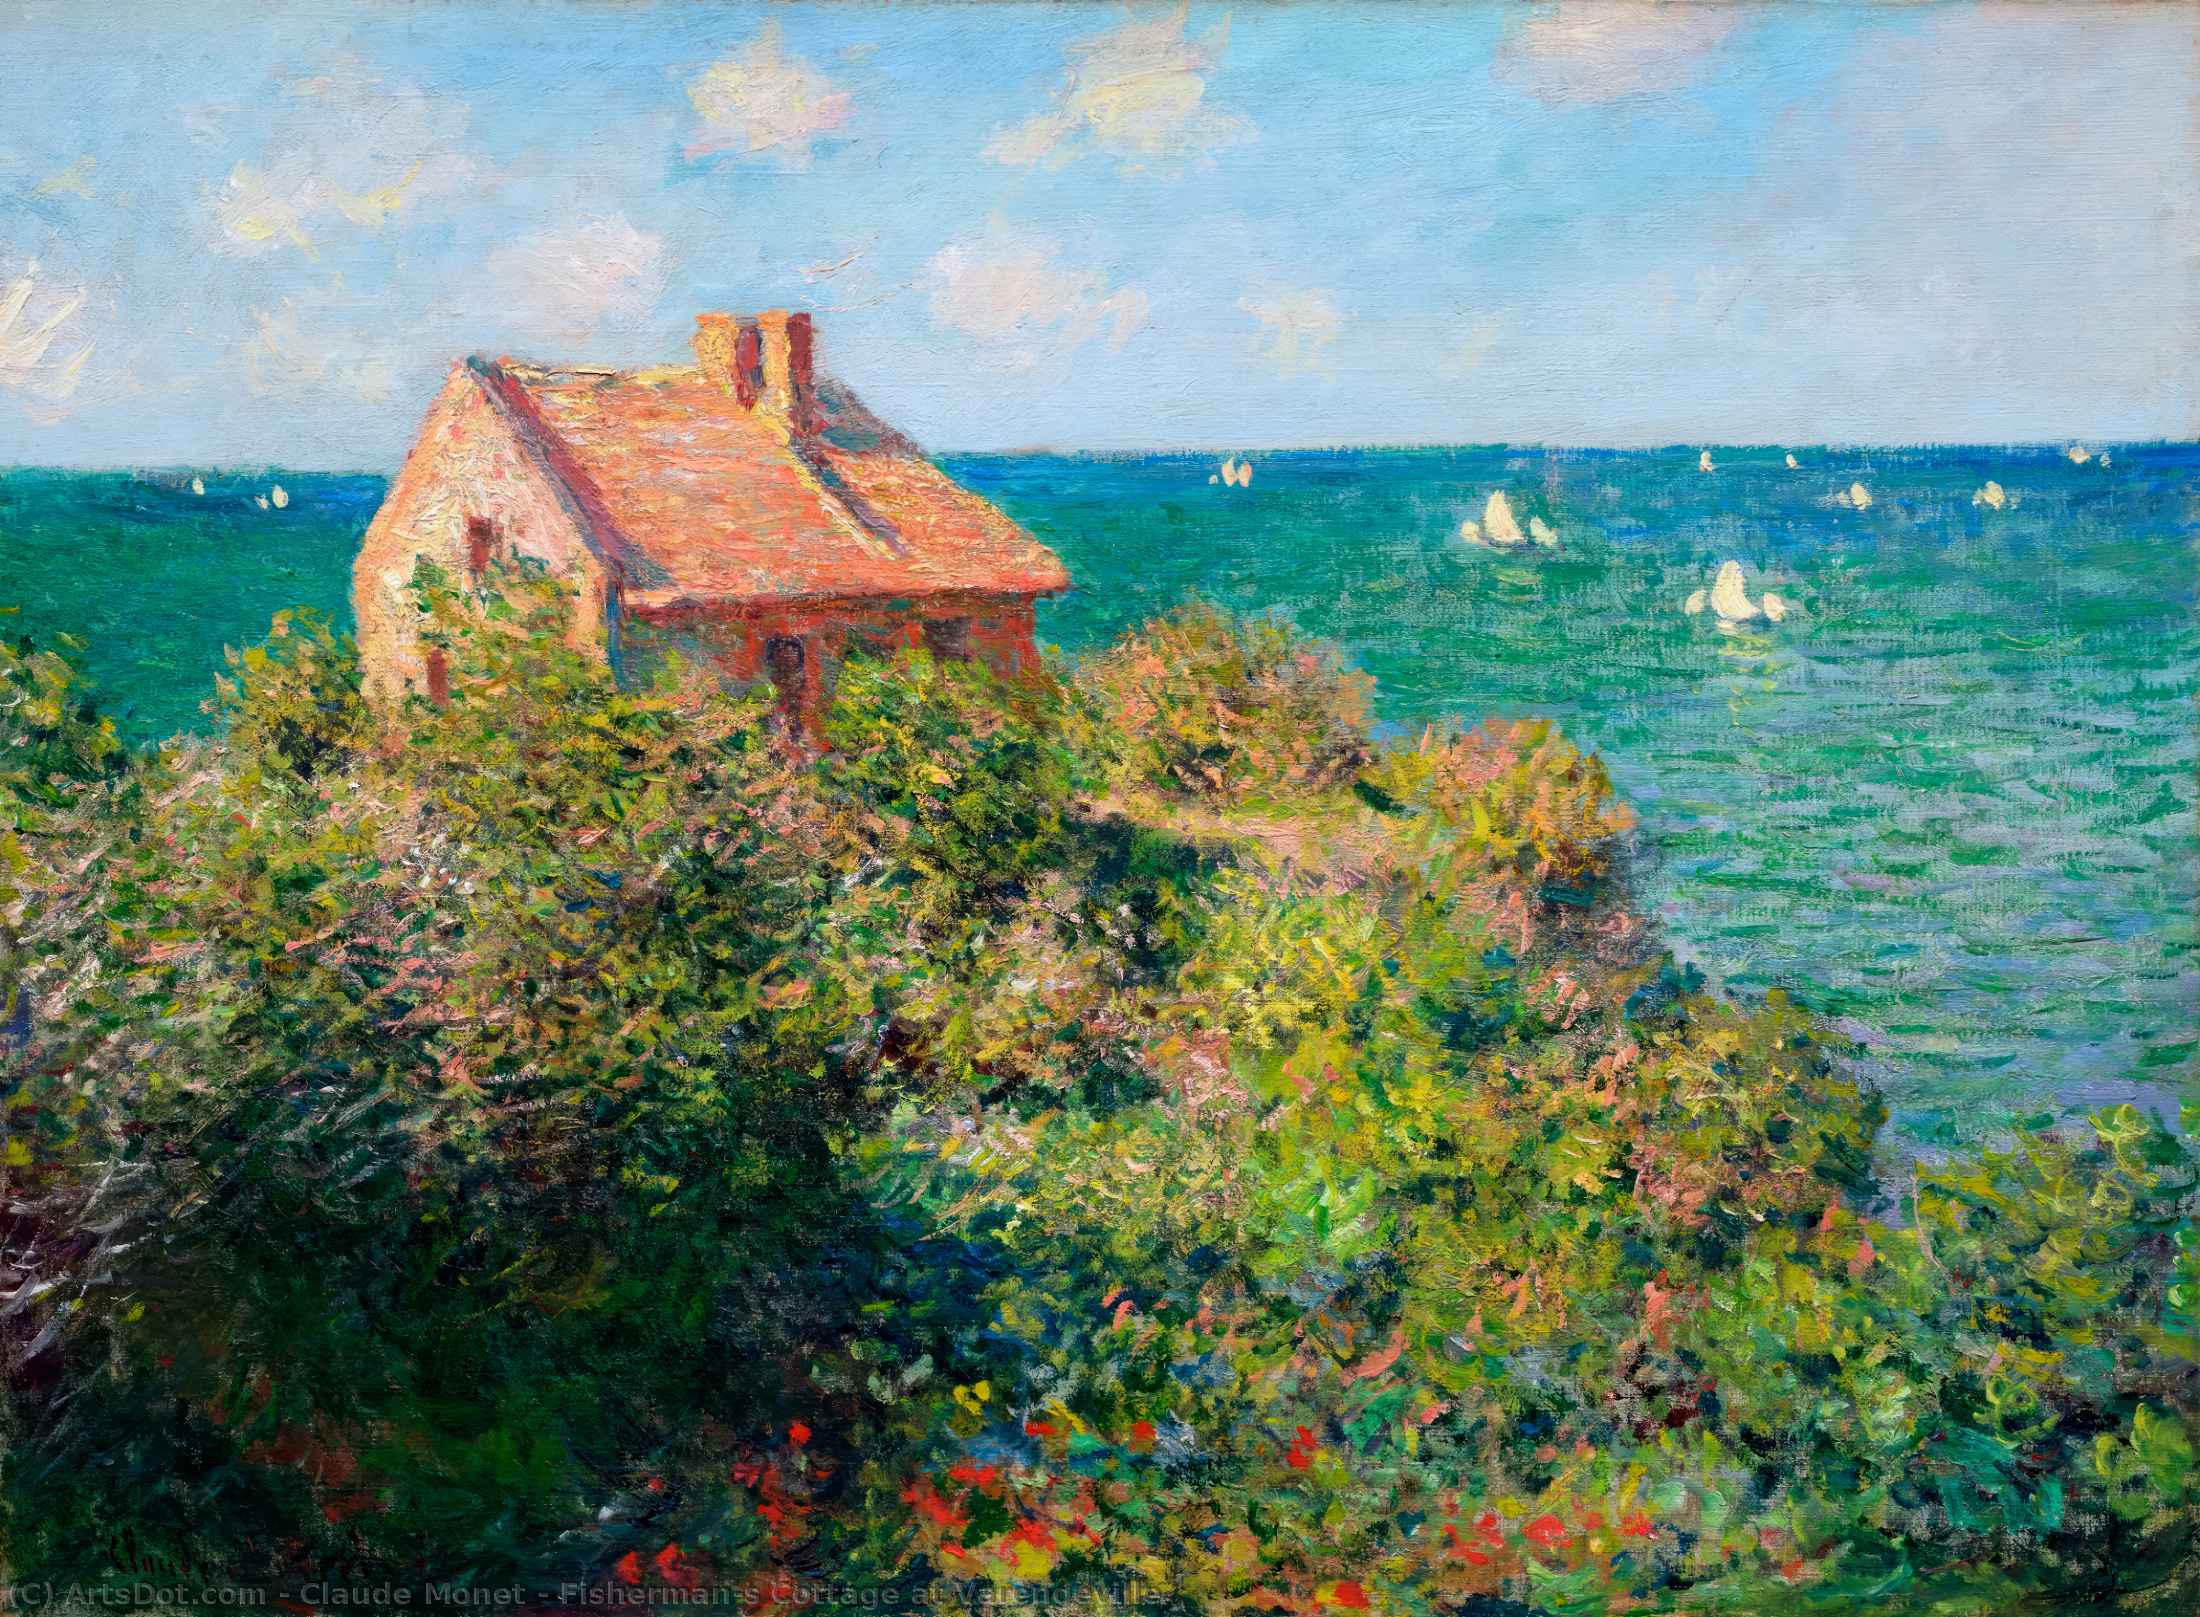 Wikioo.org – L'Enciclopedia delle Belle Arti - Pittura, Opere di Claude Monet - Fisherman's cottage a varengeville